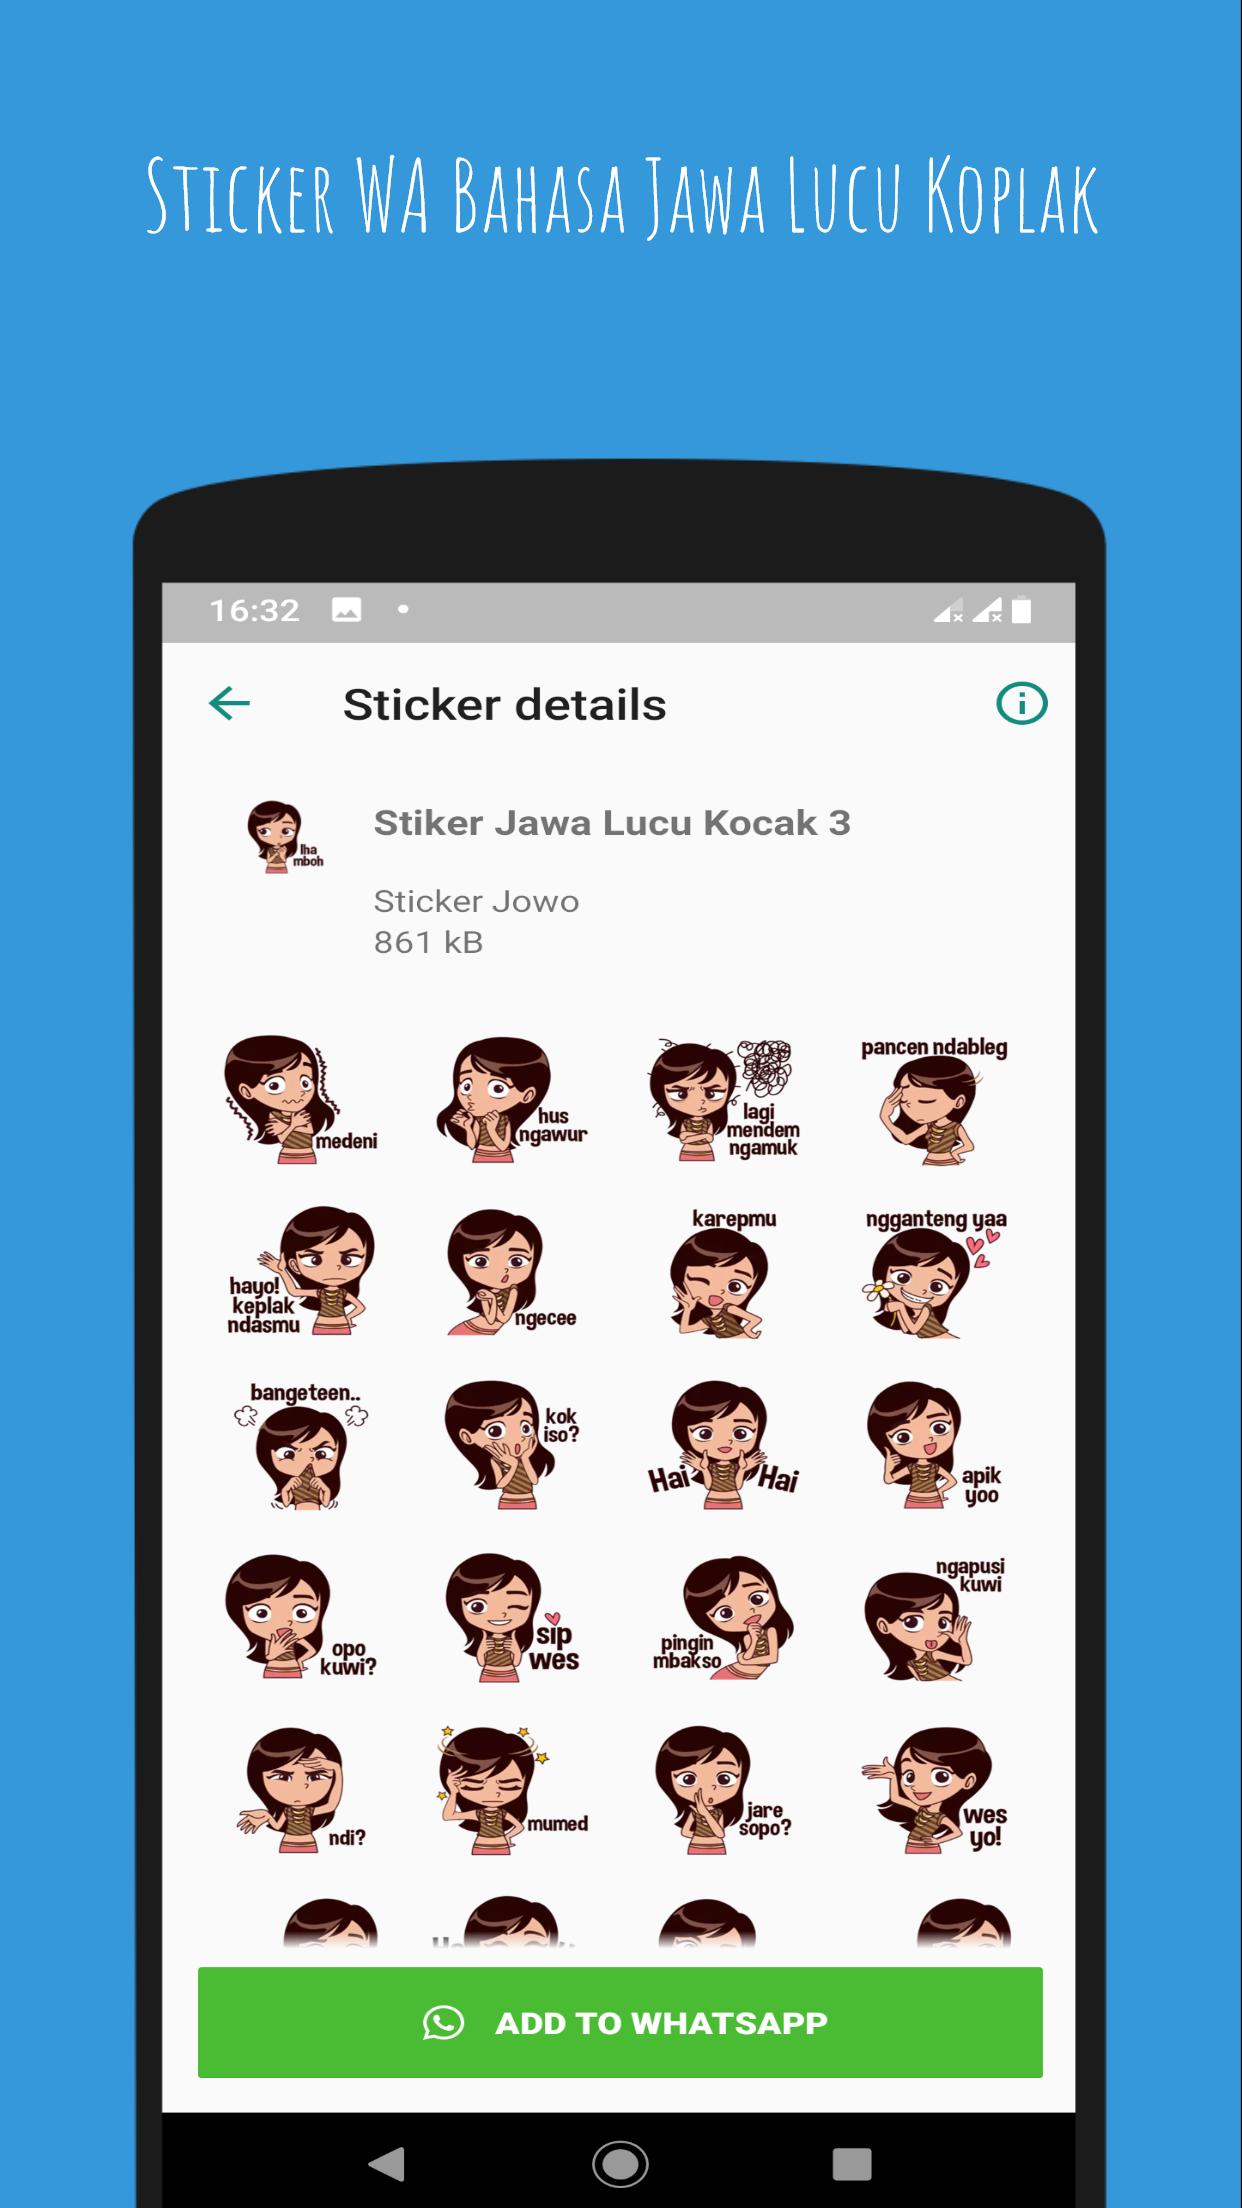 Sticker Wa Bahasa Jawa Lucu Koplak For Android Apk Download